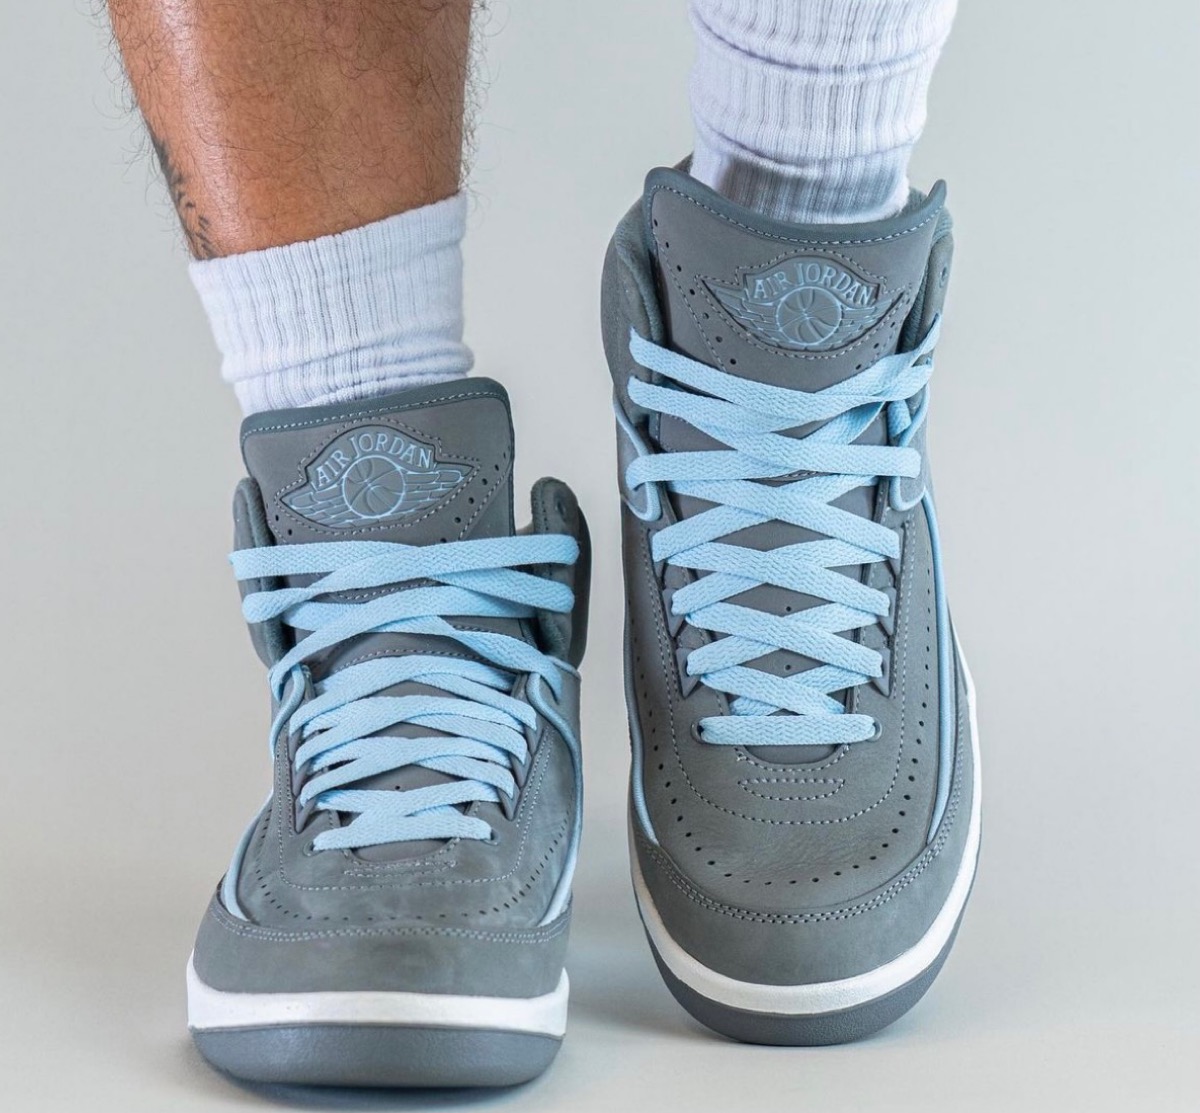 Nike Wmns Air Jordan 2 Retro “Cool Grey”が国内5月4日に発売予定